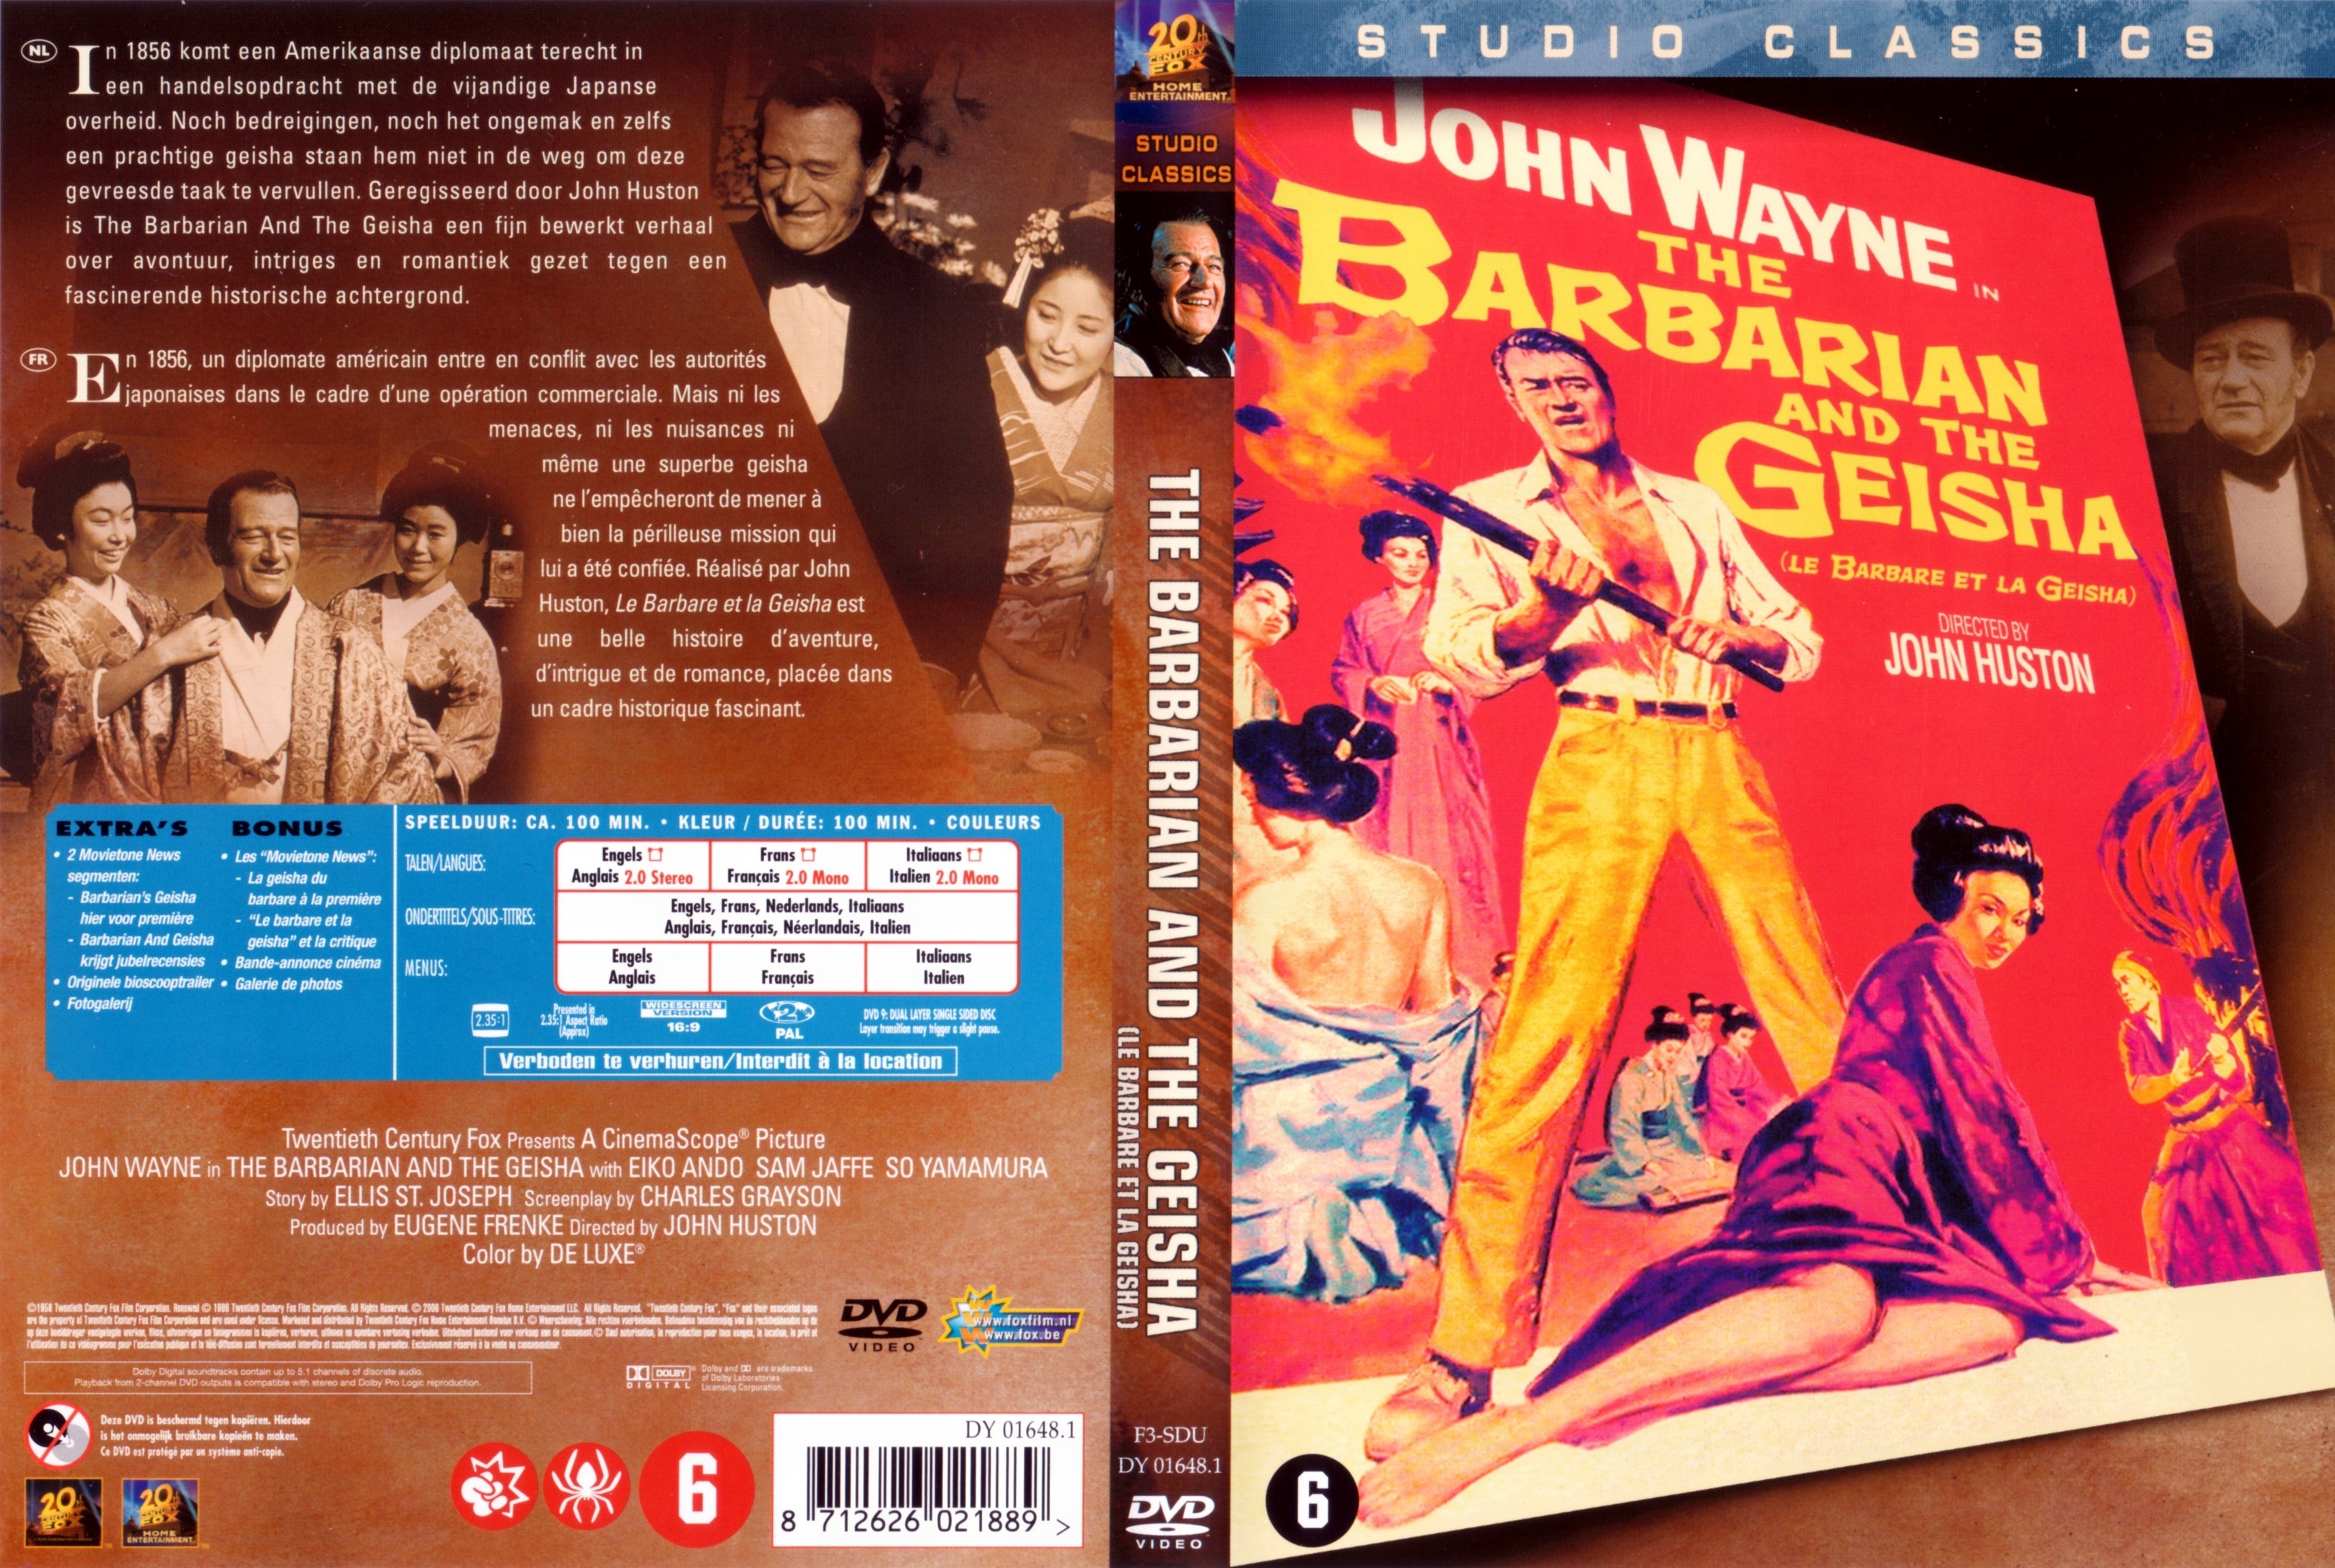 Jaquette DVD Le barbare et la geisha